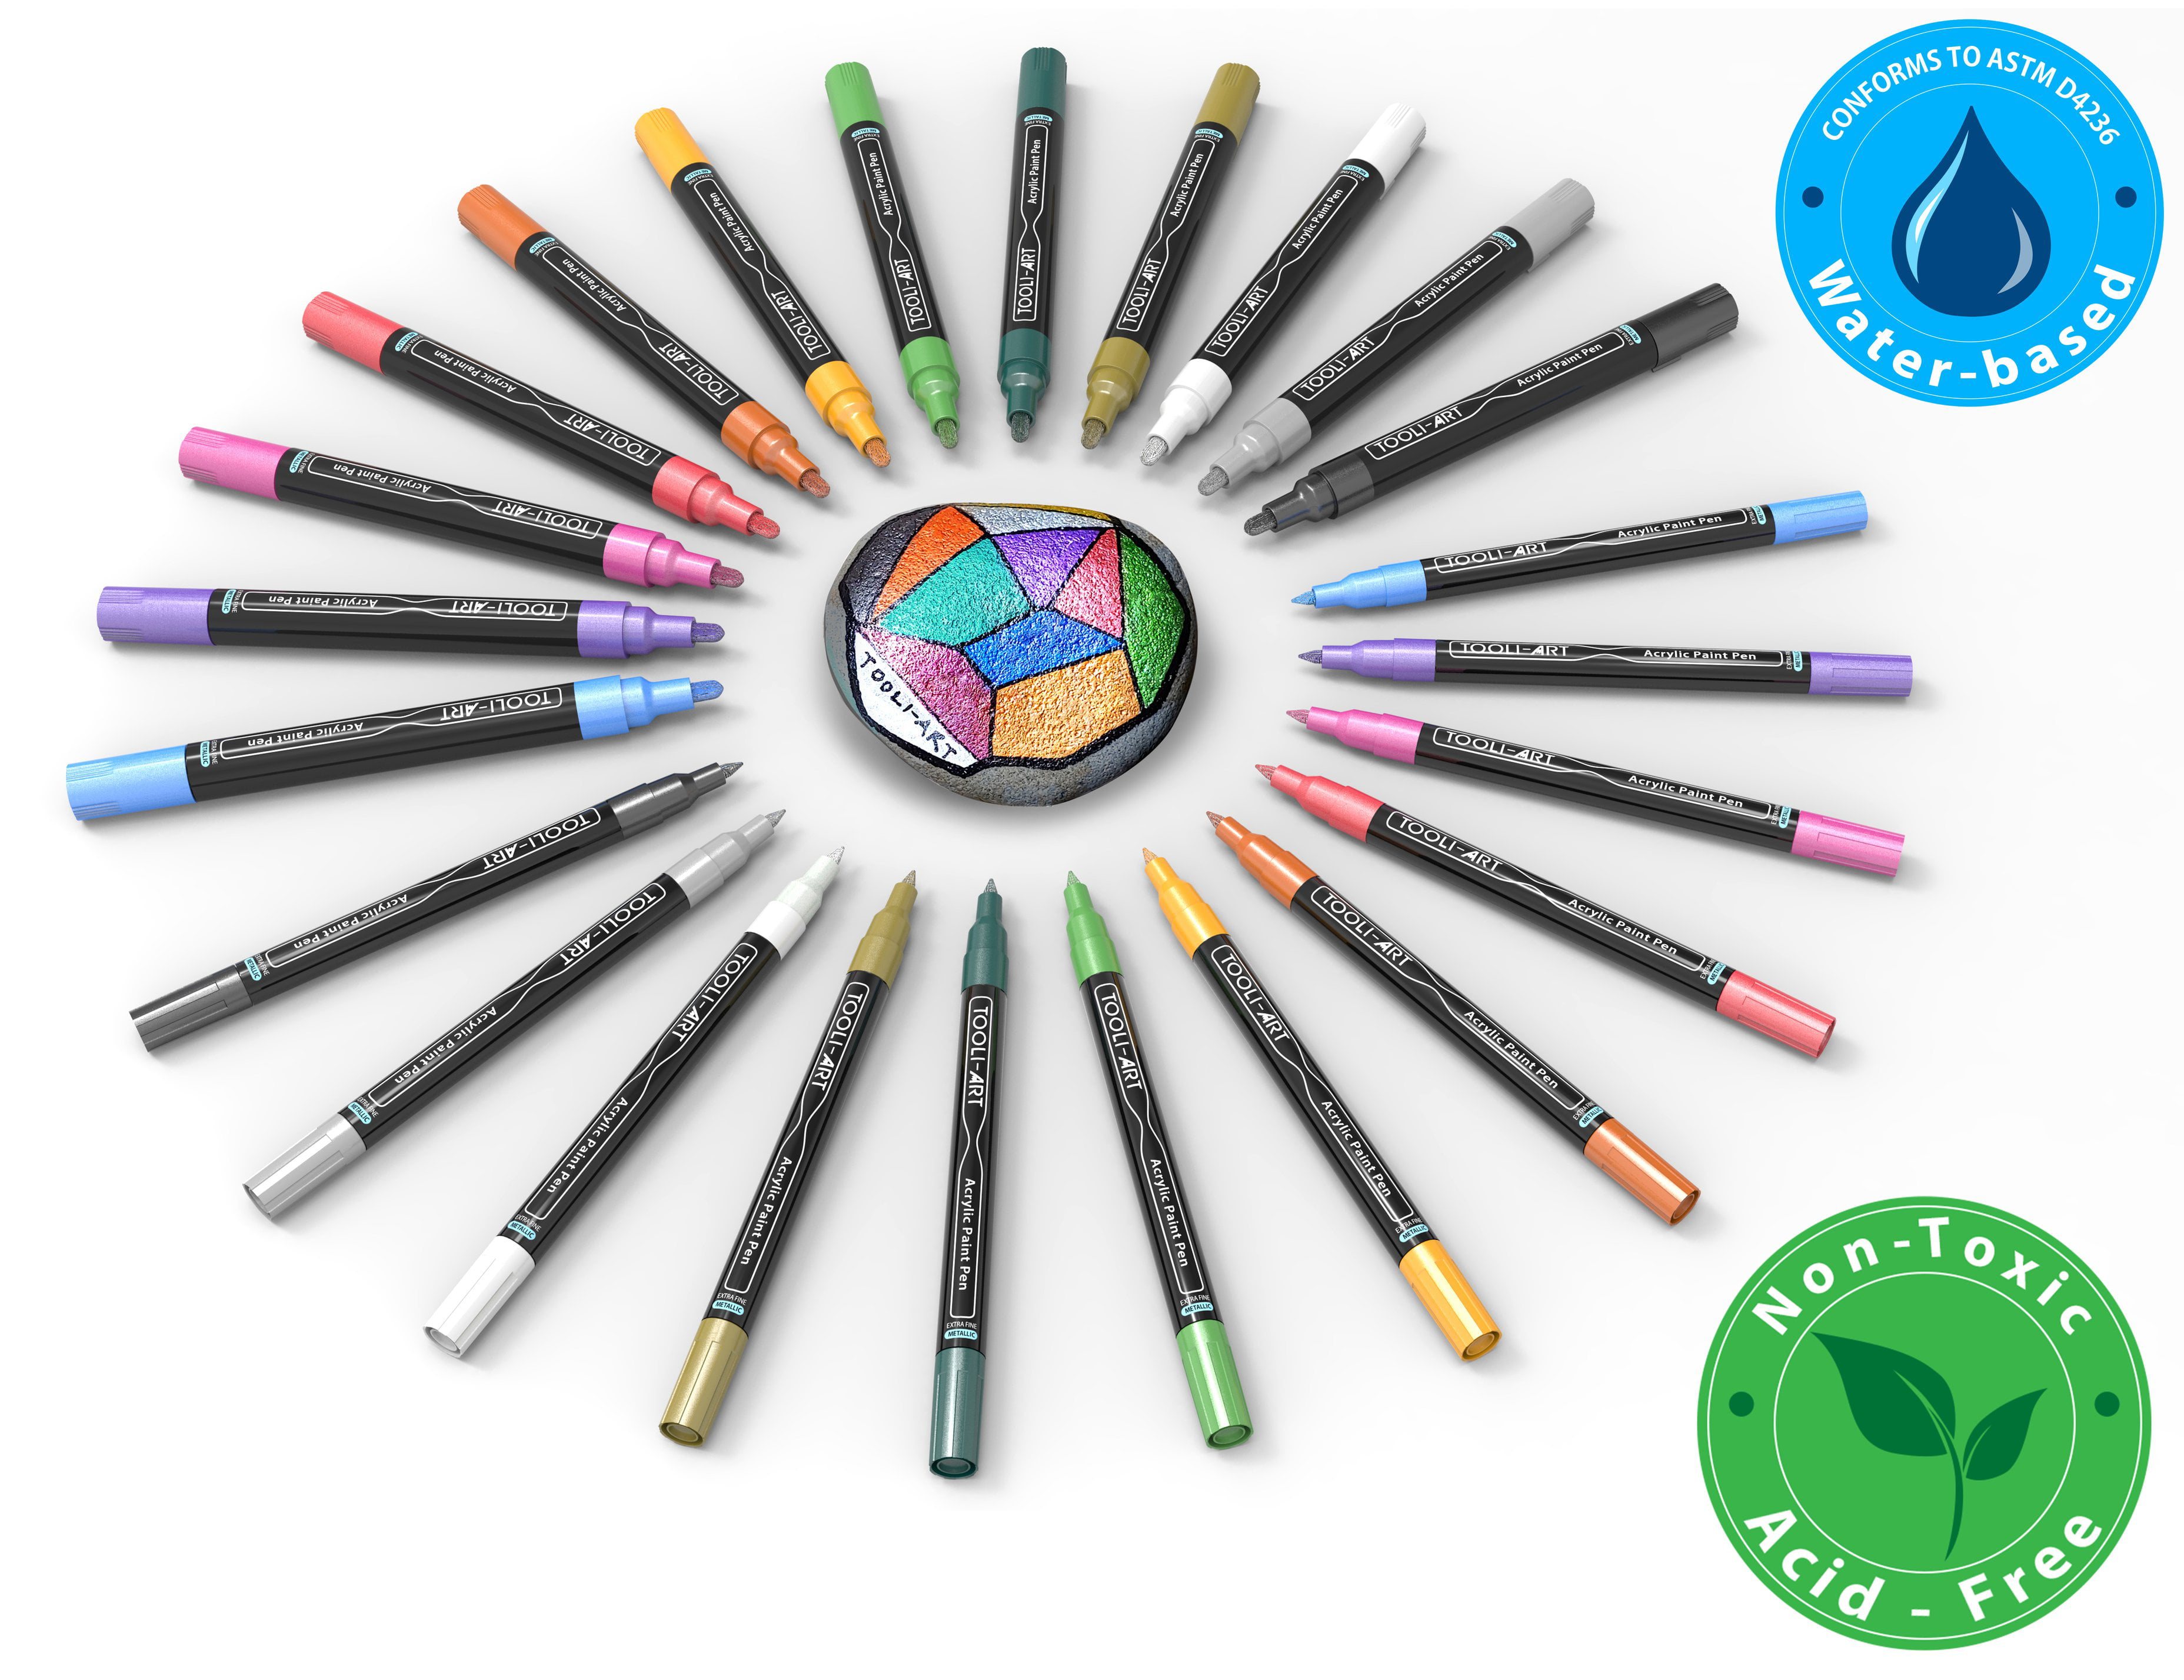 Tooli-Art Acrylic Paint Pens 24 Set Glitter Extra Fine & Medium